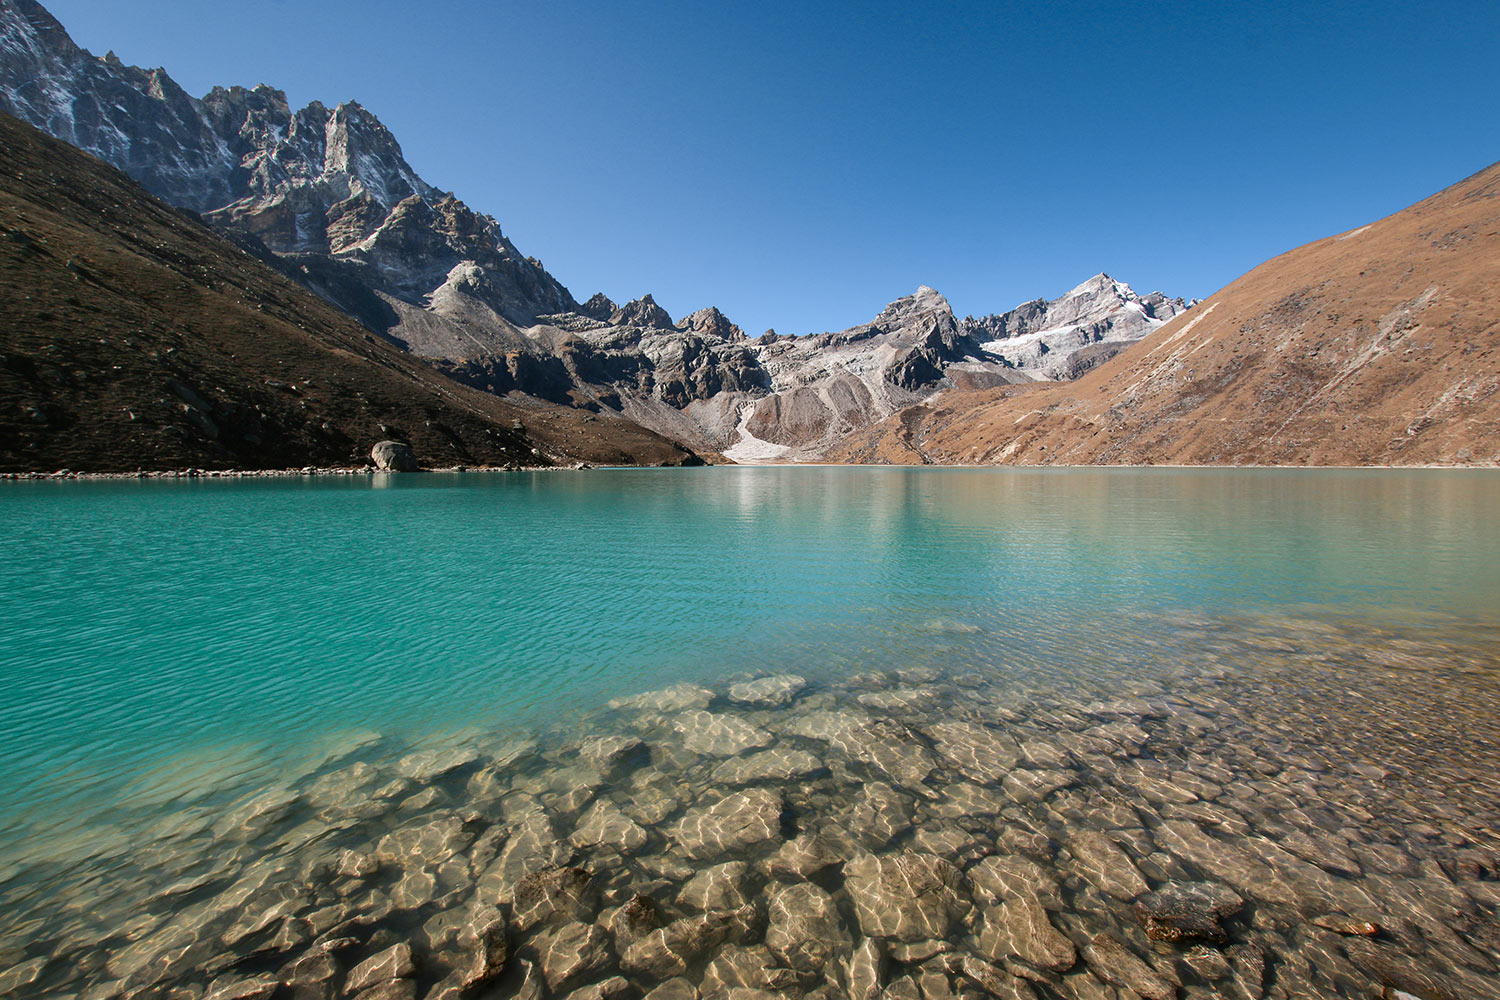 Deuxième lac, Randonnée Gokyo, Népal / Second lake, Dole, Gokyo hiking, Nepal